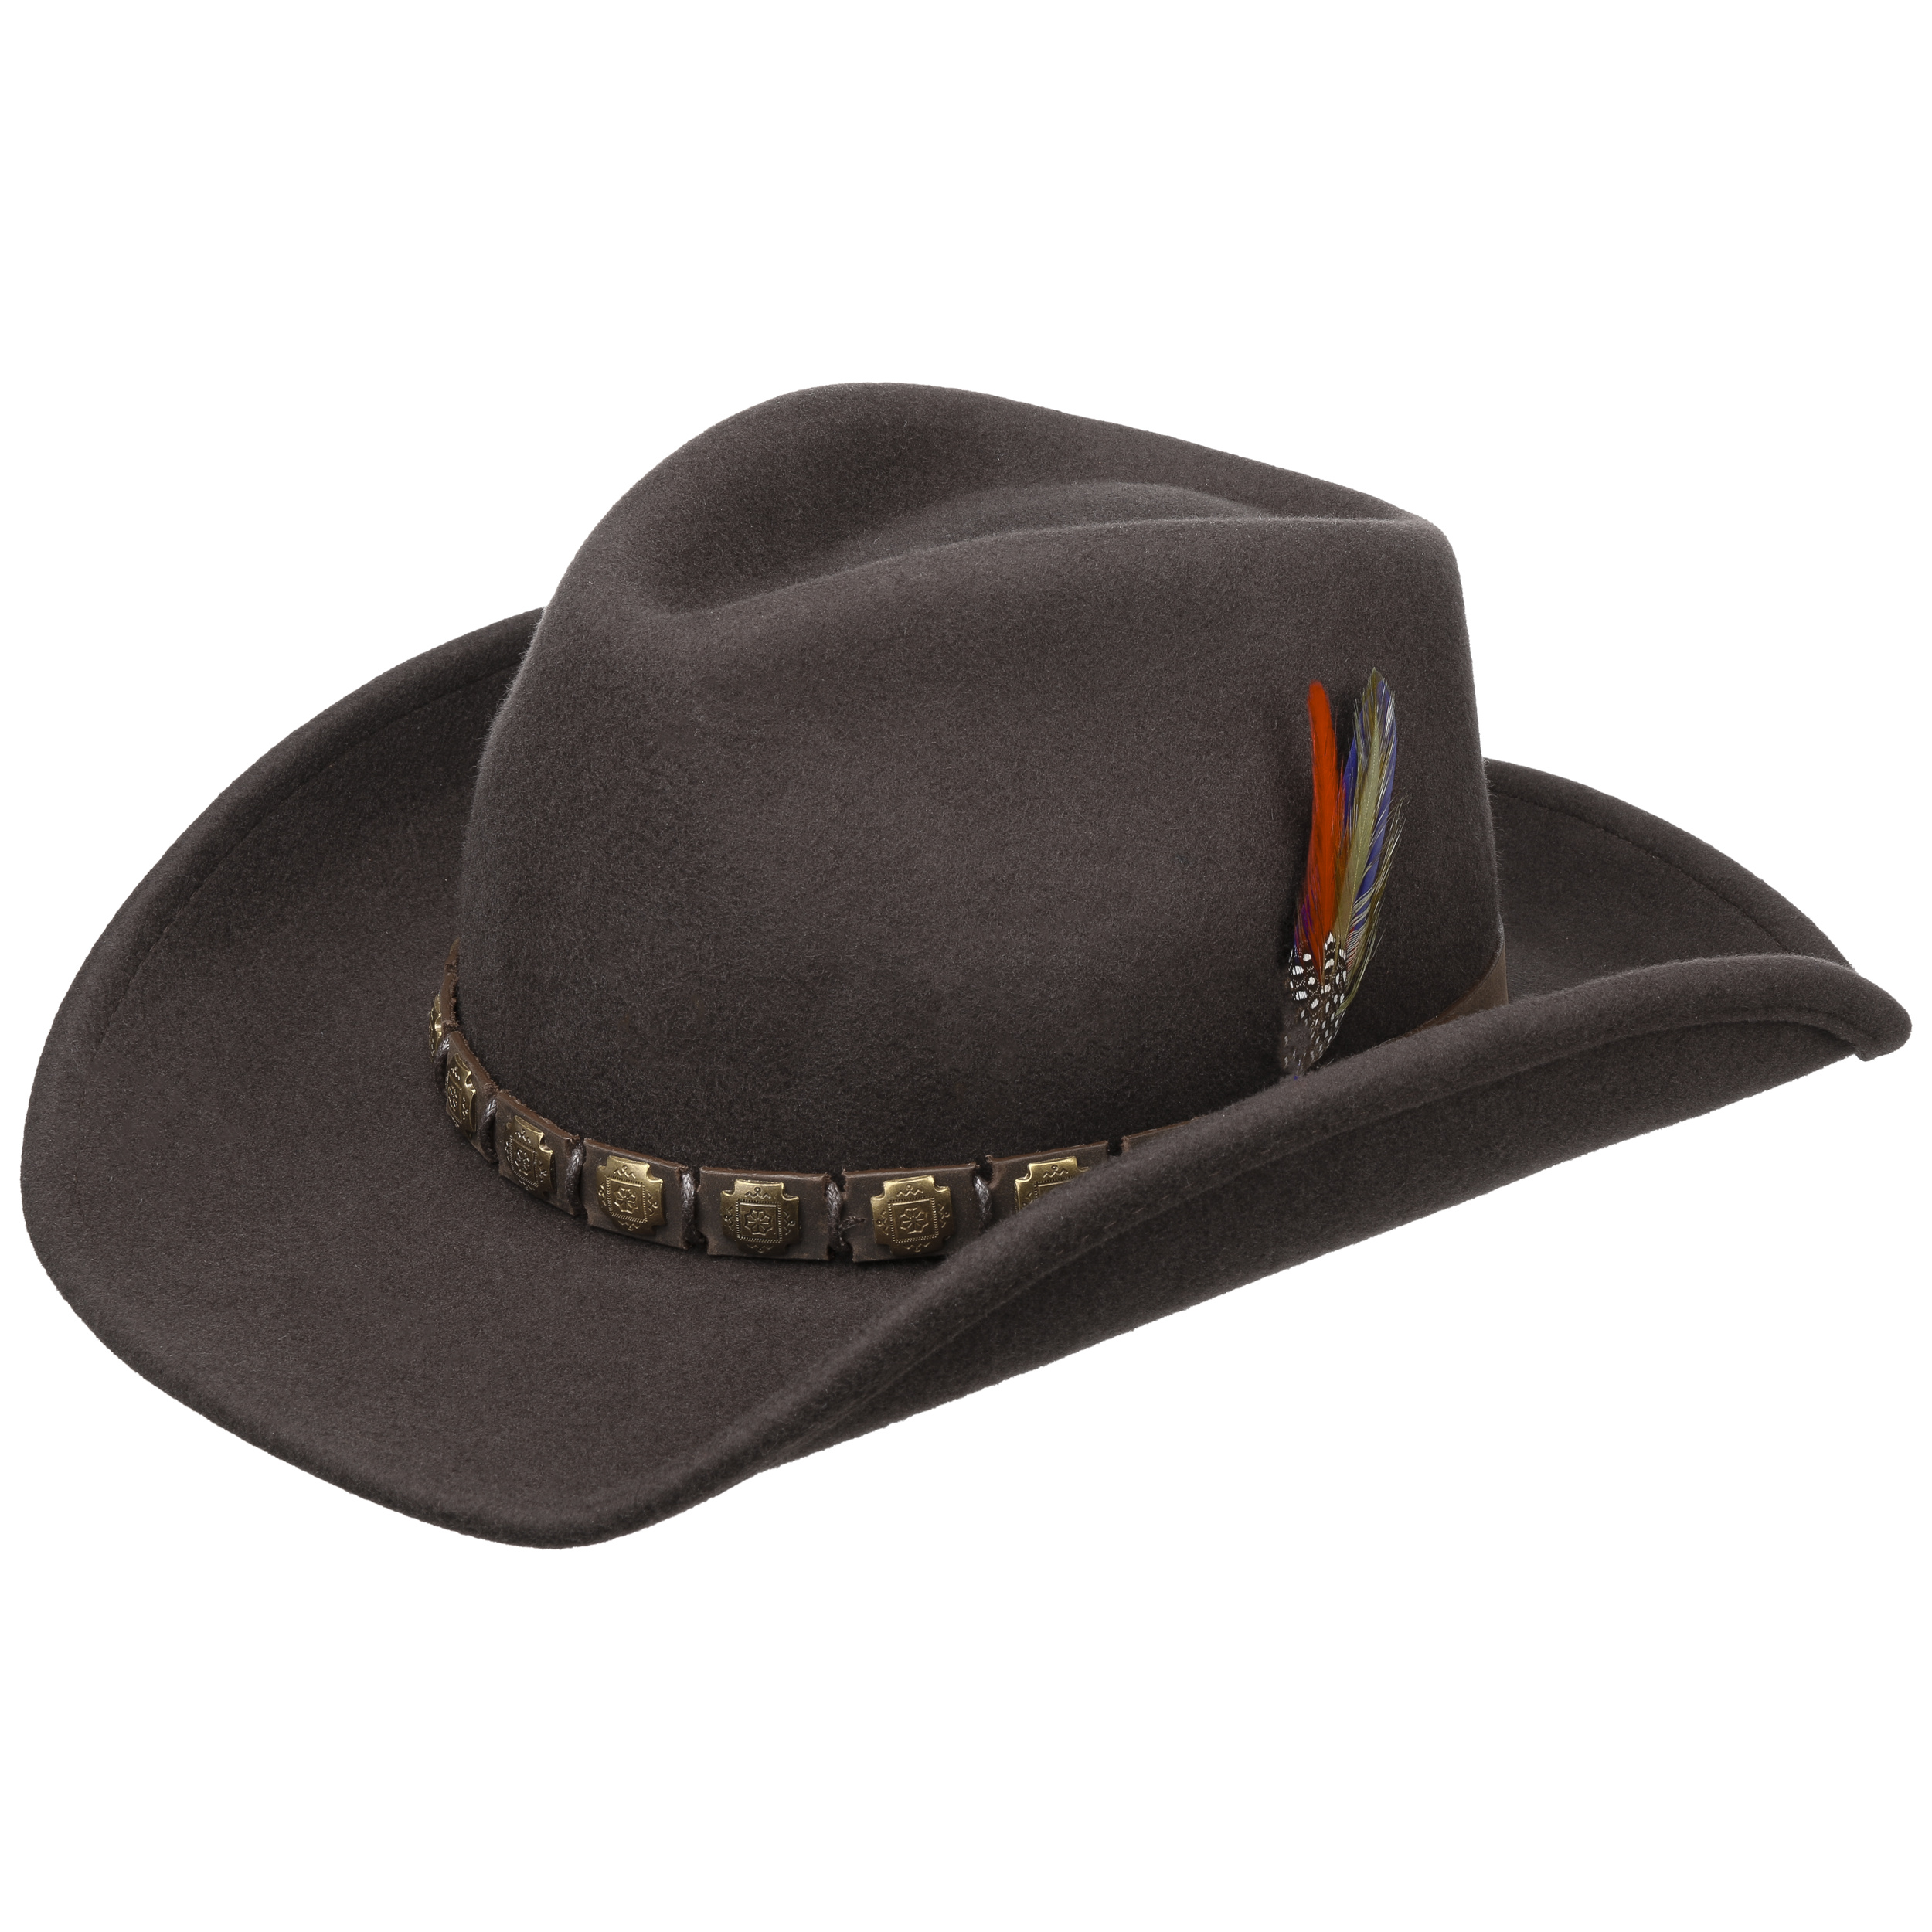 Wool Cowboy Felt with Leather Trim Summer-Winter Stetson Hackberry Western Hat Men